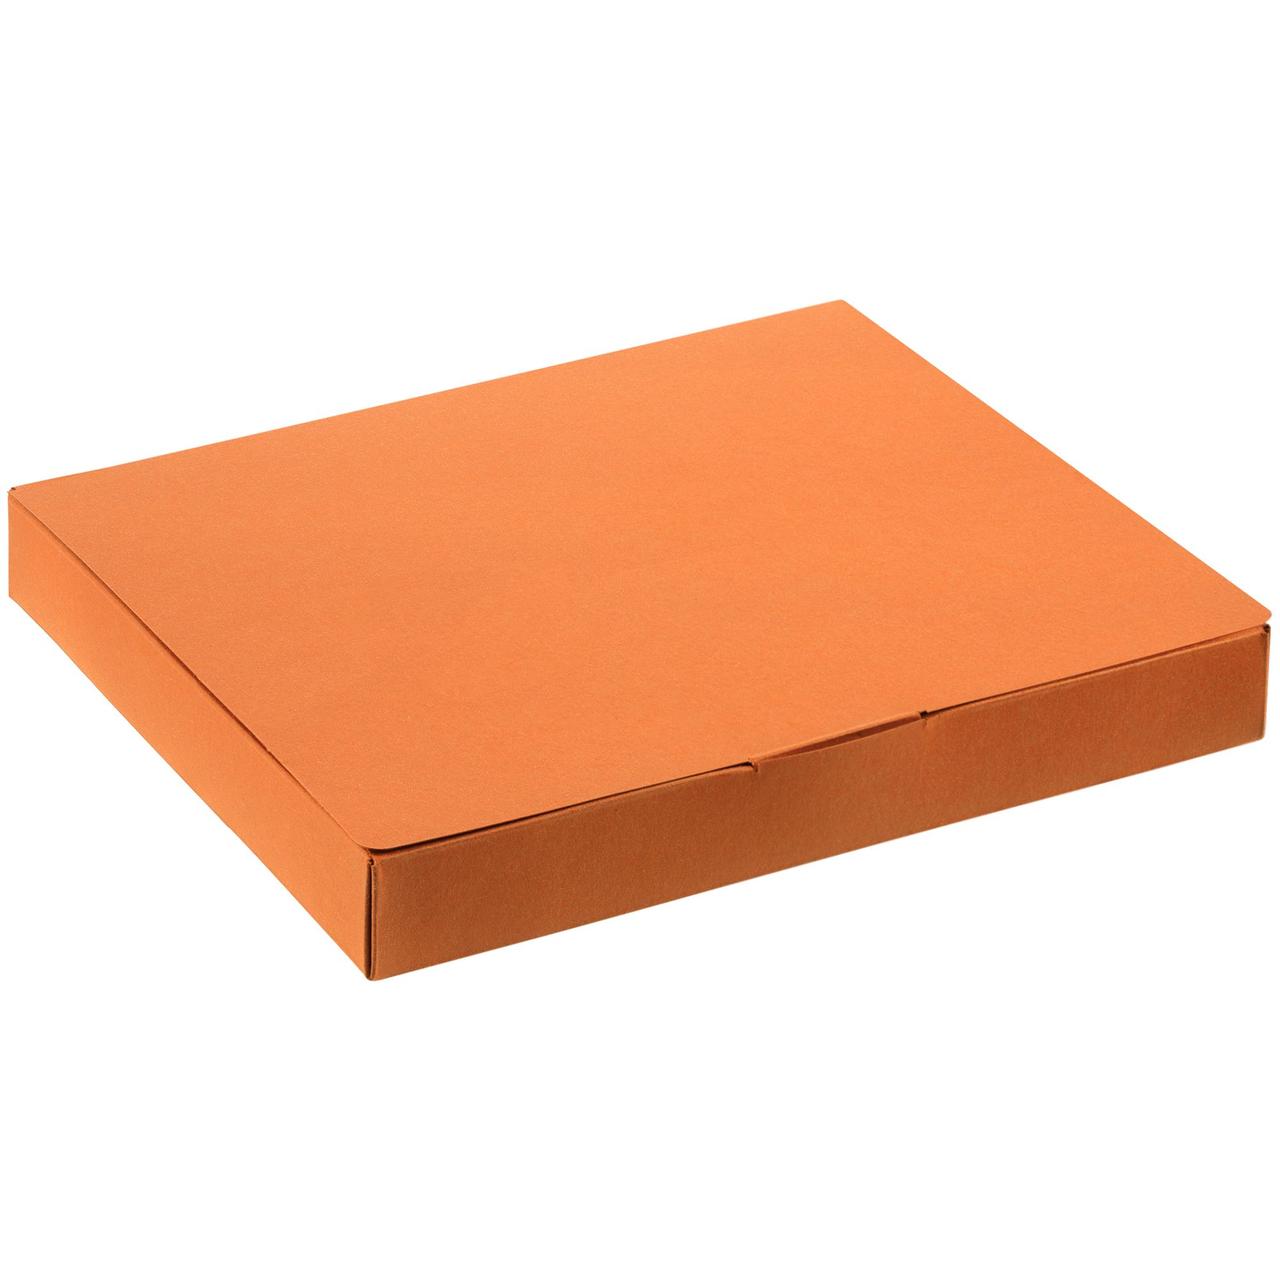 Коробка самосборная Flacky, оранжевая (артикул 12208.20)